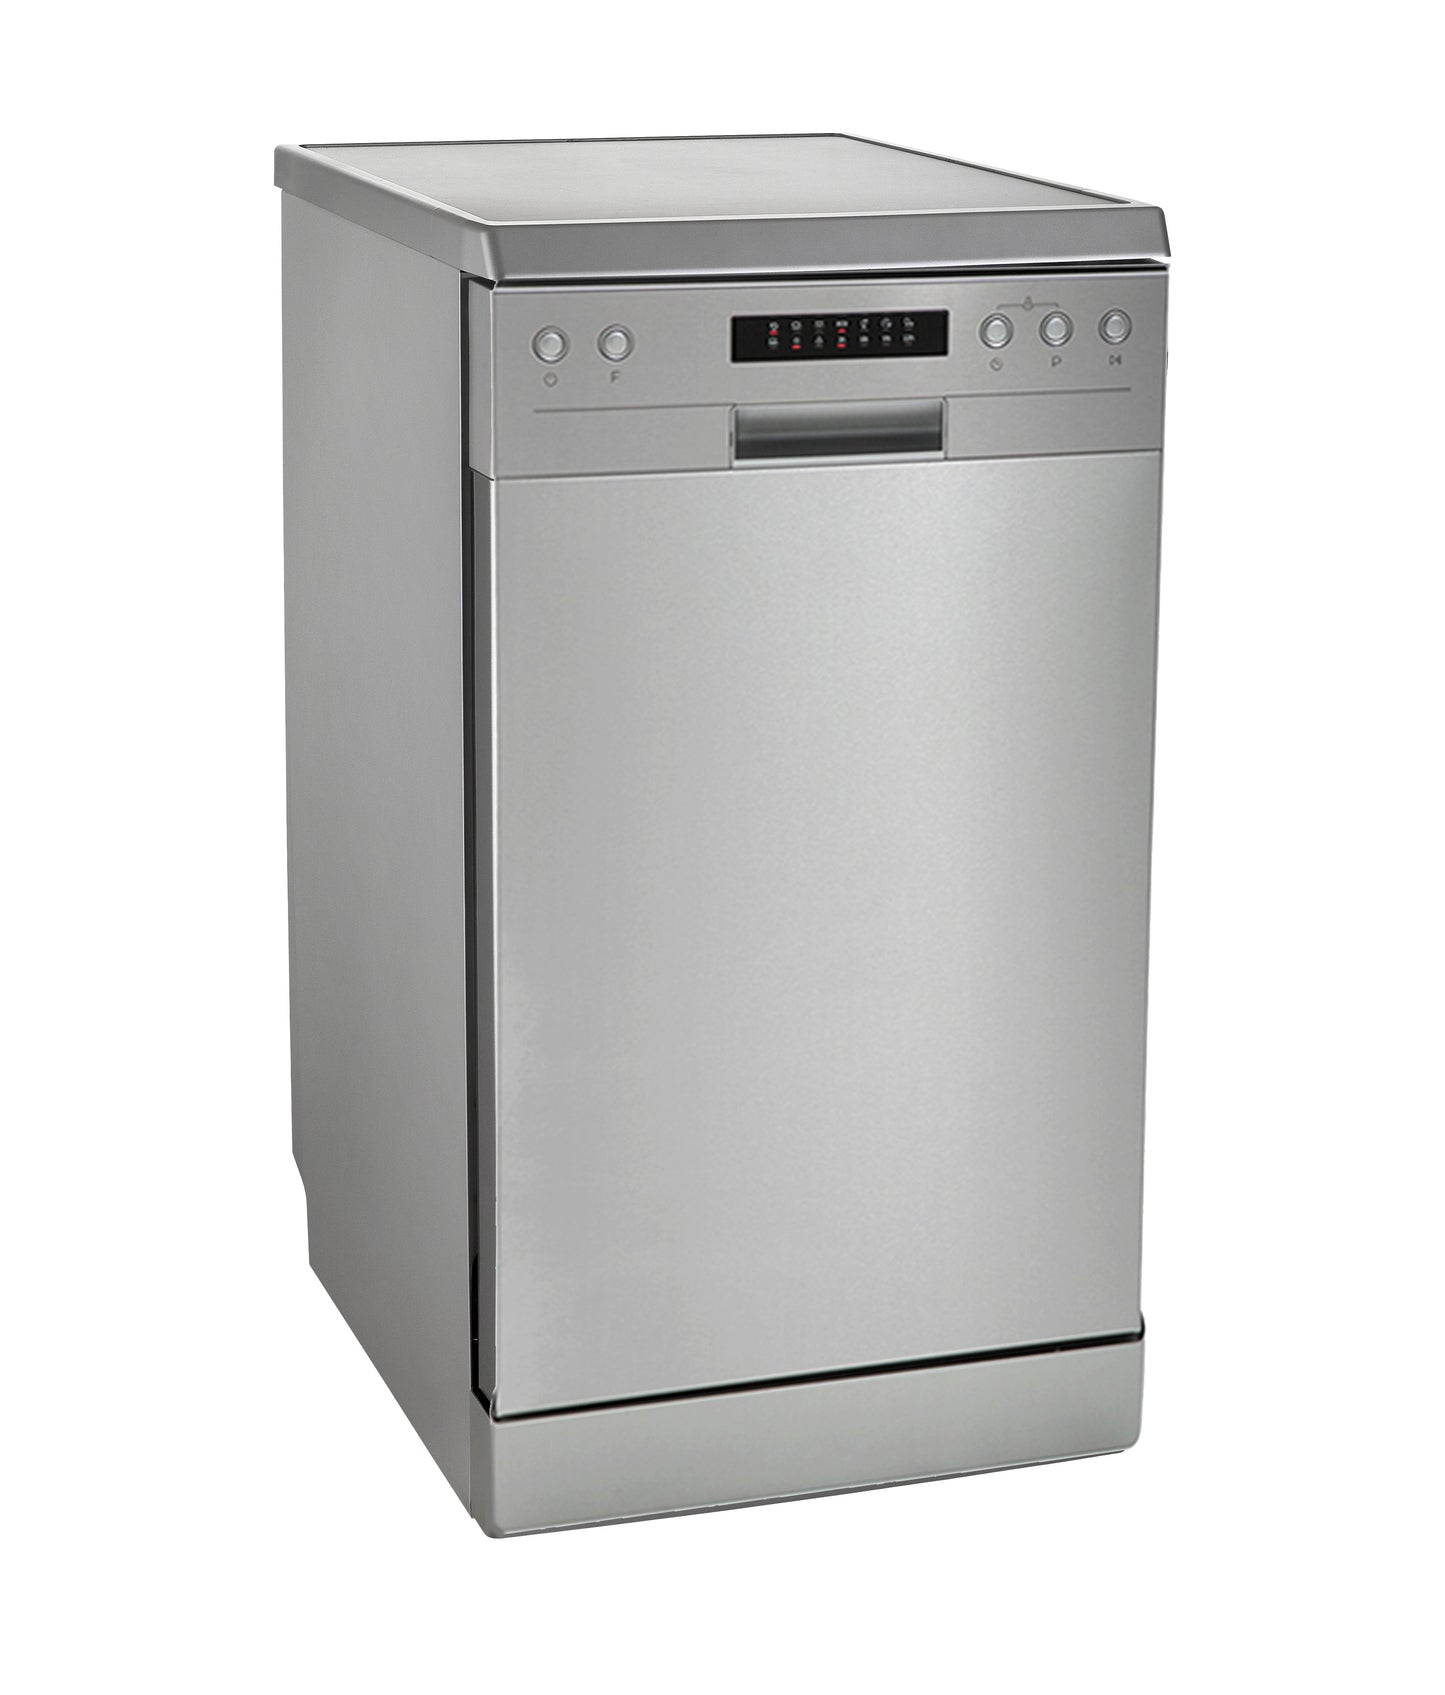 Venini V-GDW45S Stainless Steel Dishwasher